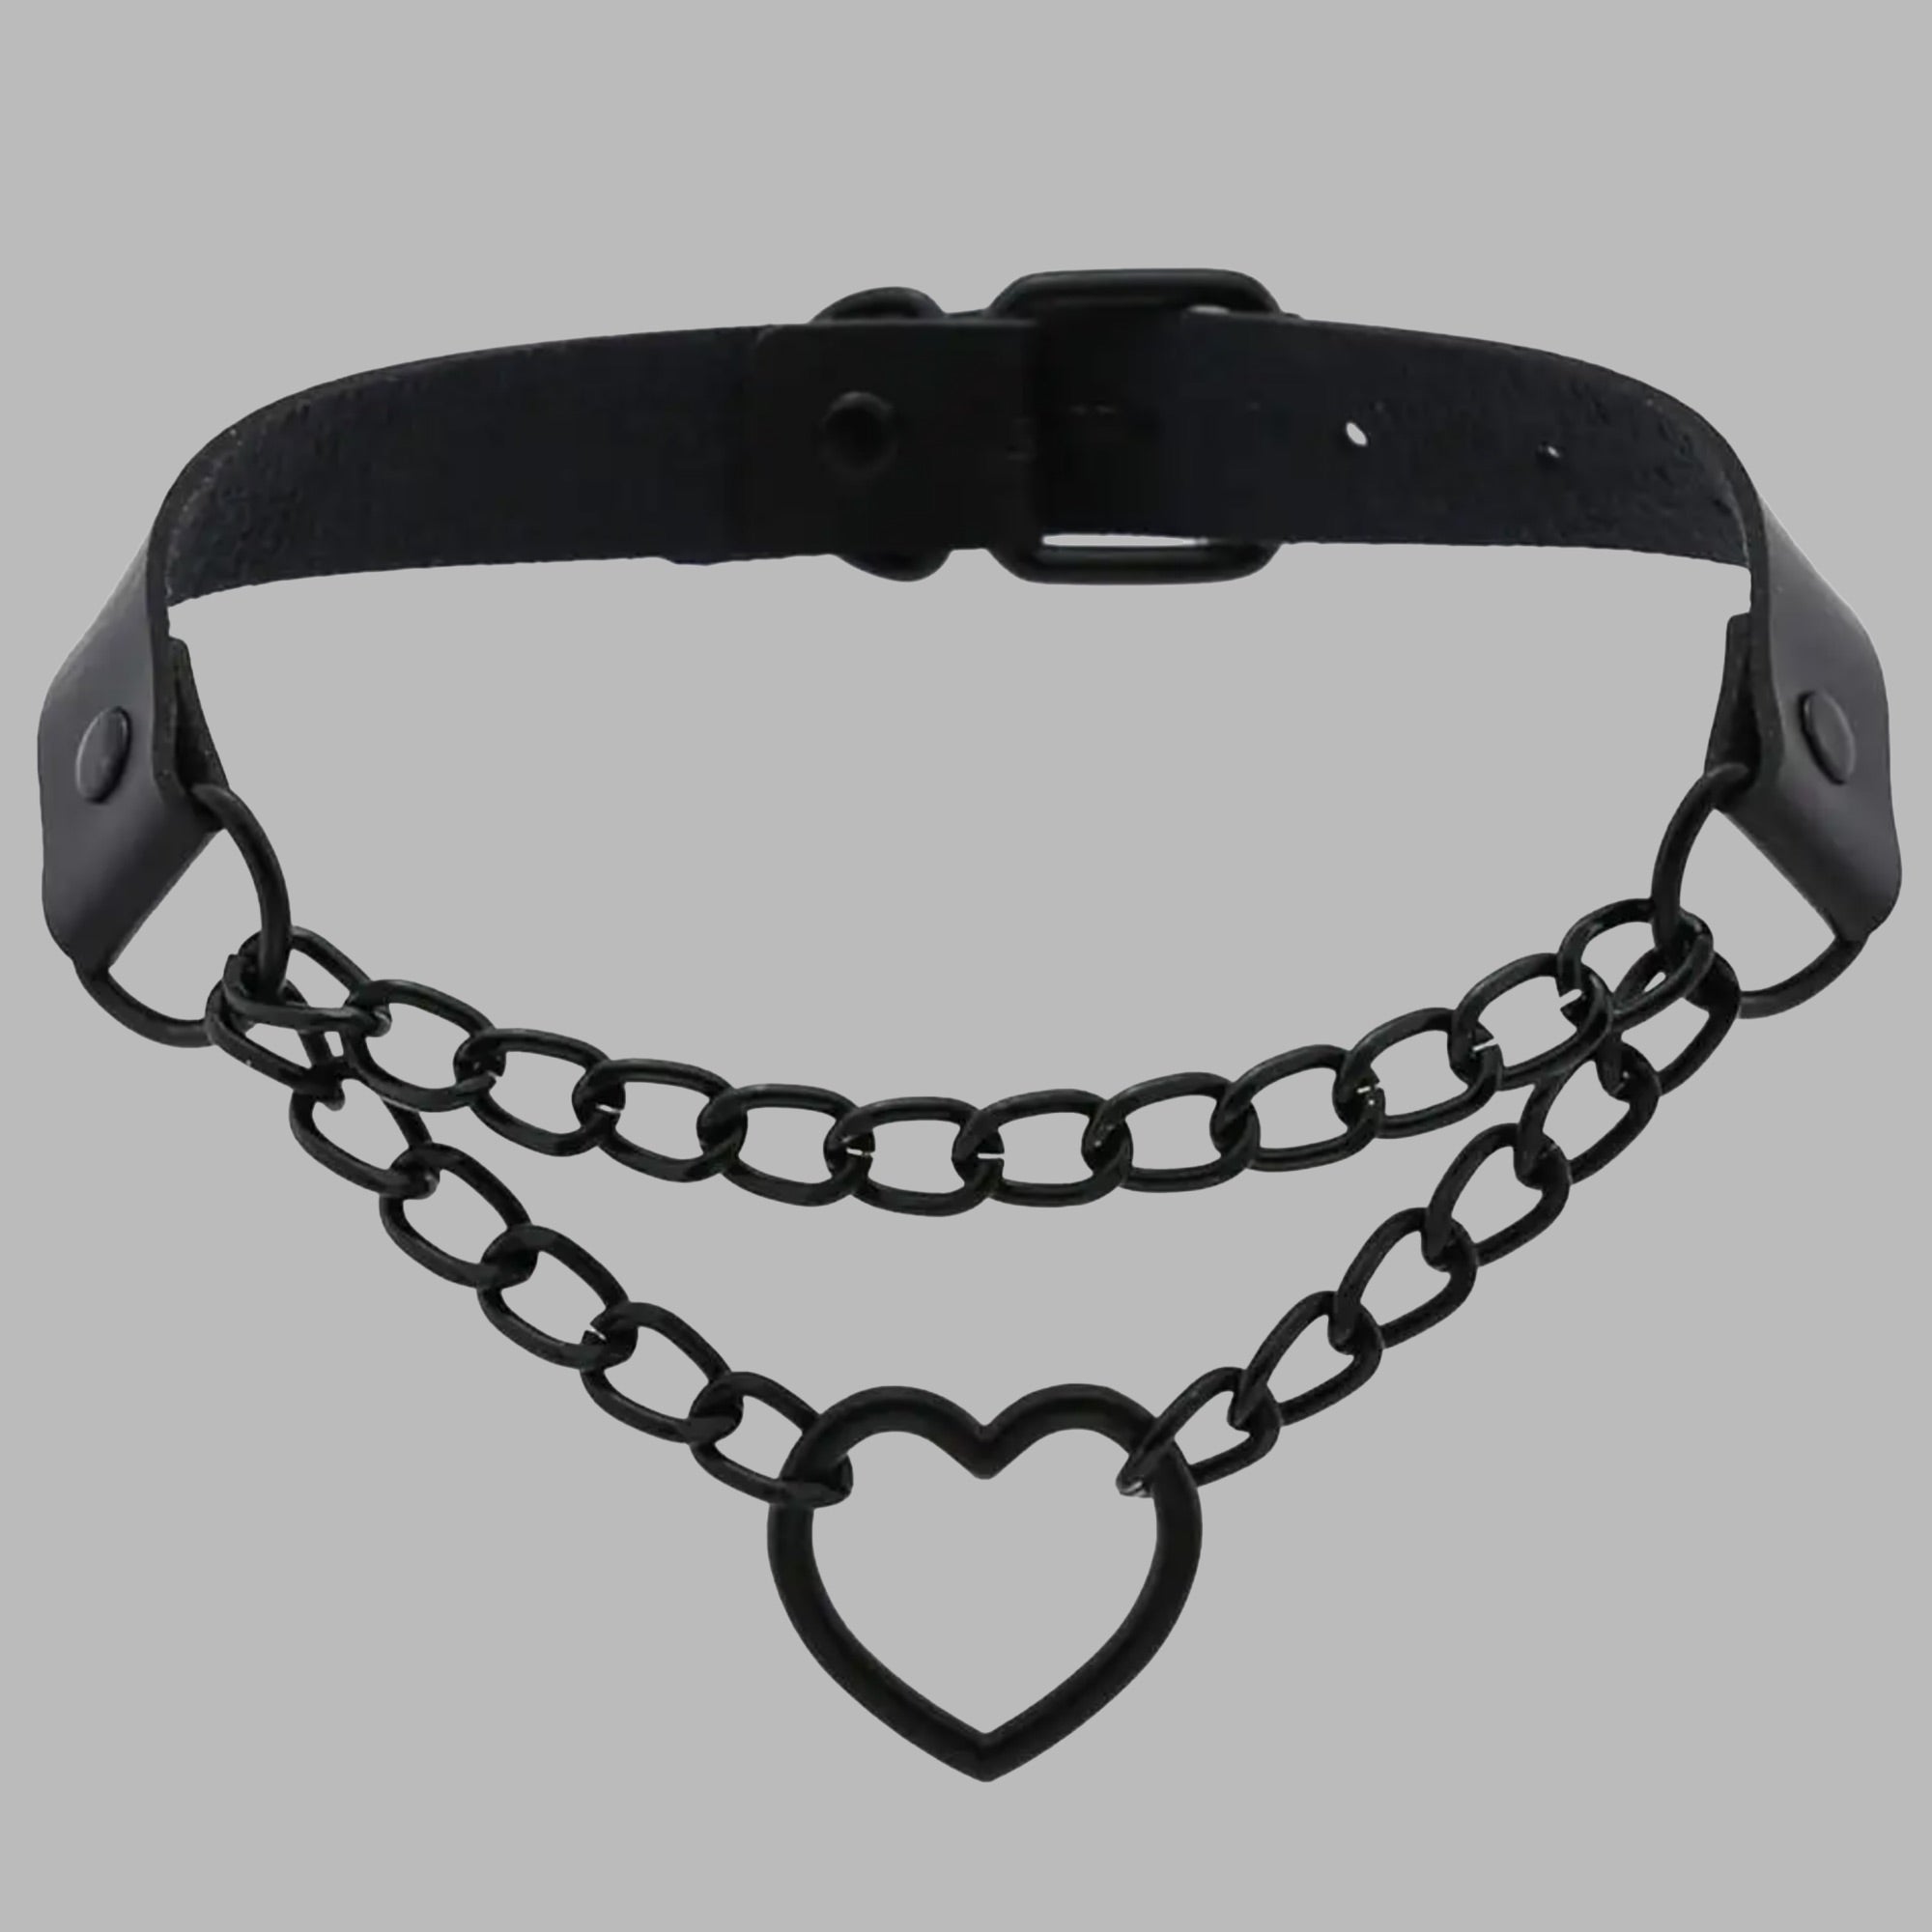 Chained Heart Choker - Black & Black